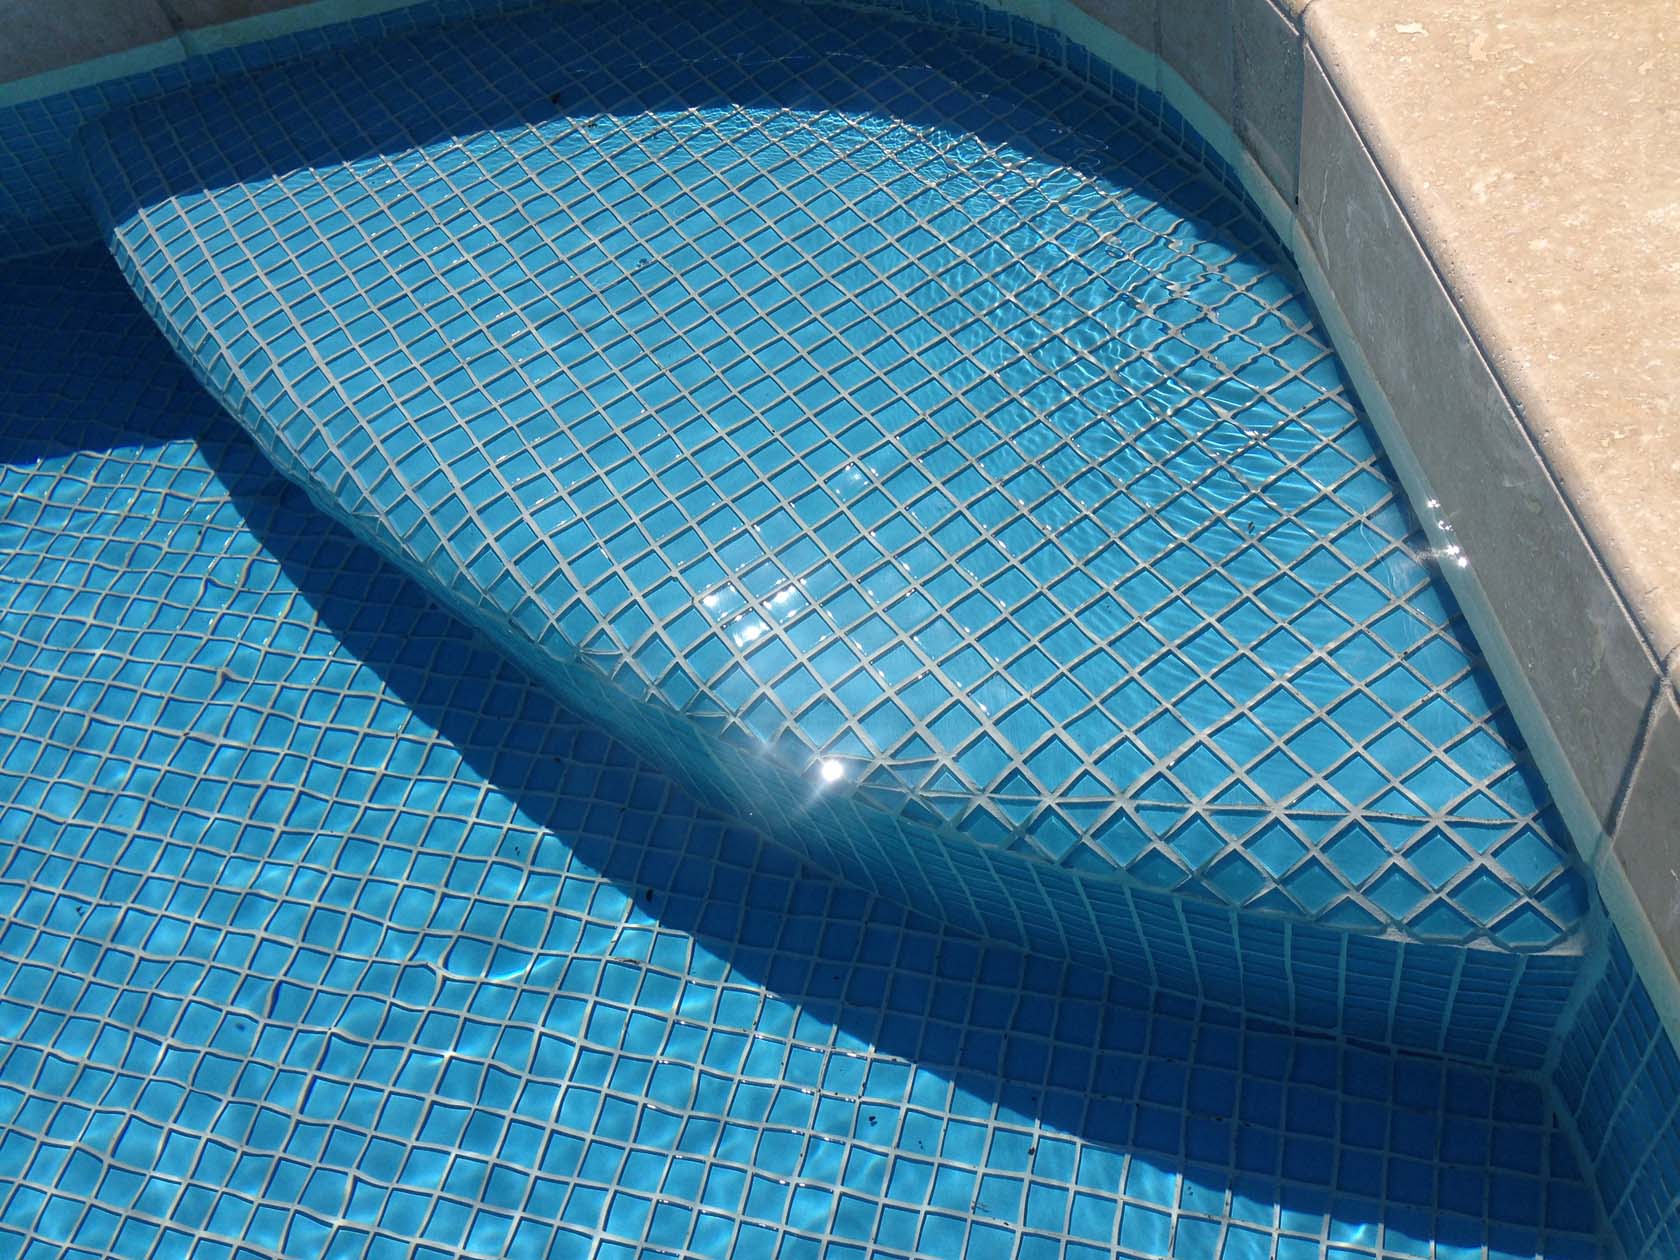 GCR210 Sky Blue Crystal fully tiled pool